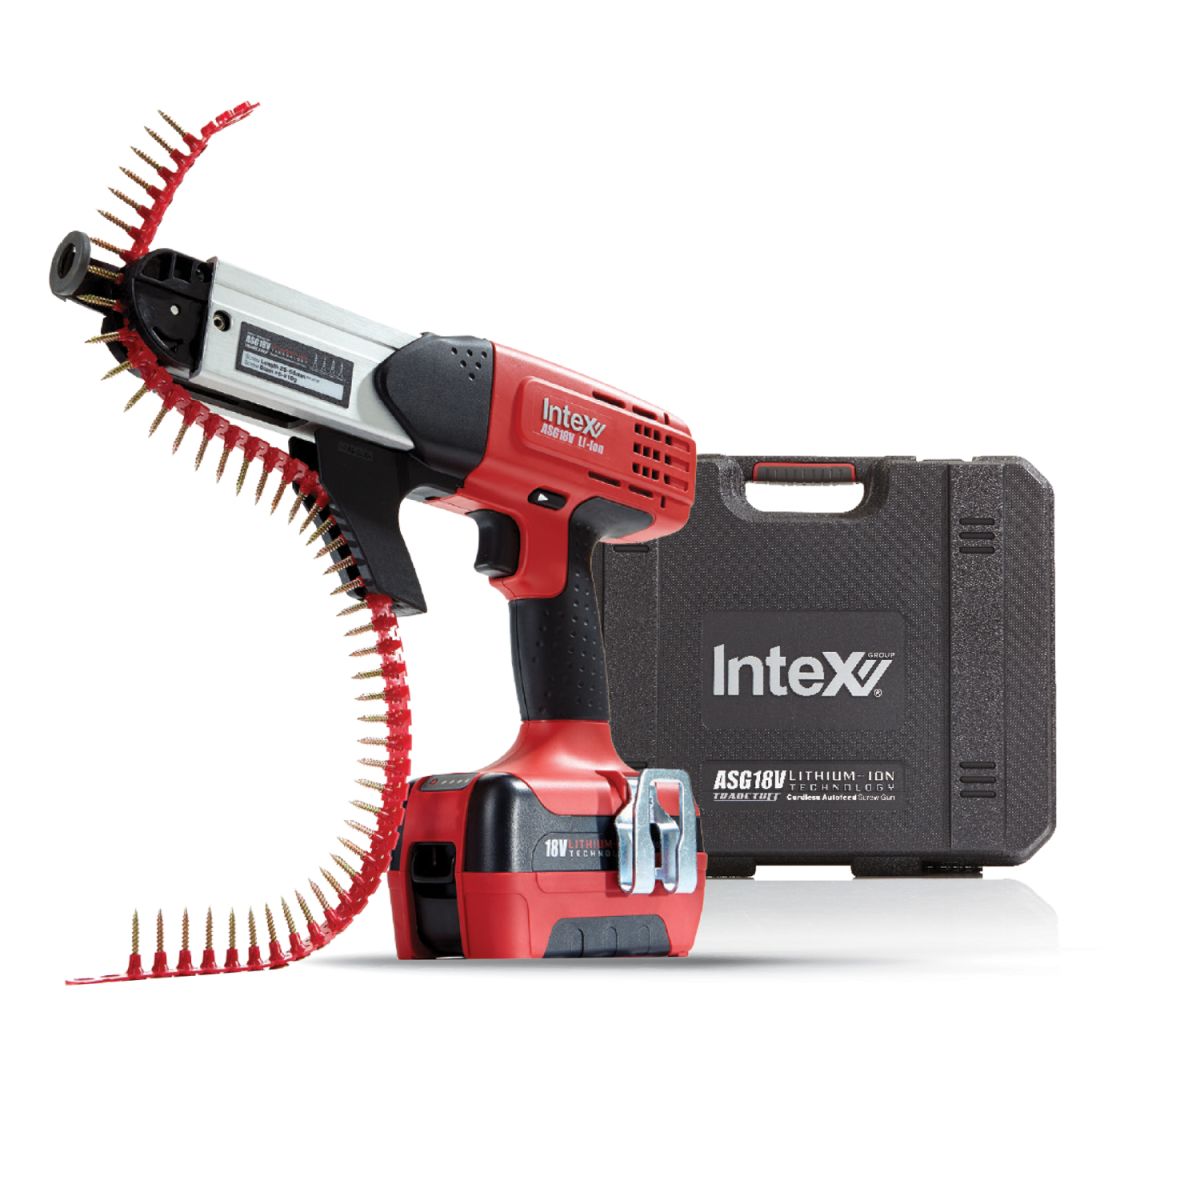 Intex Autofeed Screw Gun Kit 3.0AH 18V Li-Ion (Incl. 2 Batteries & Charger)
